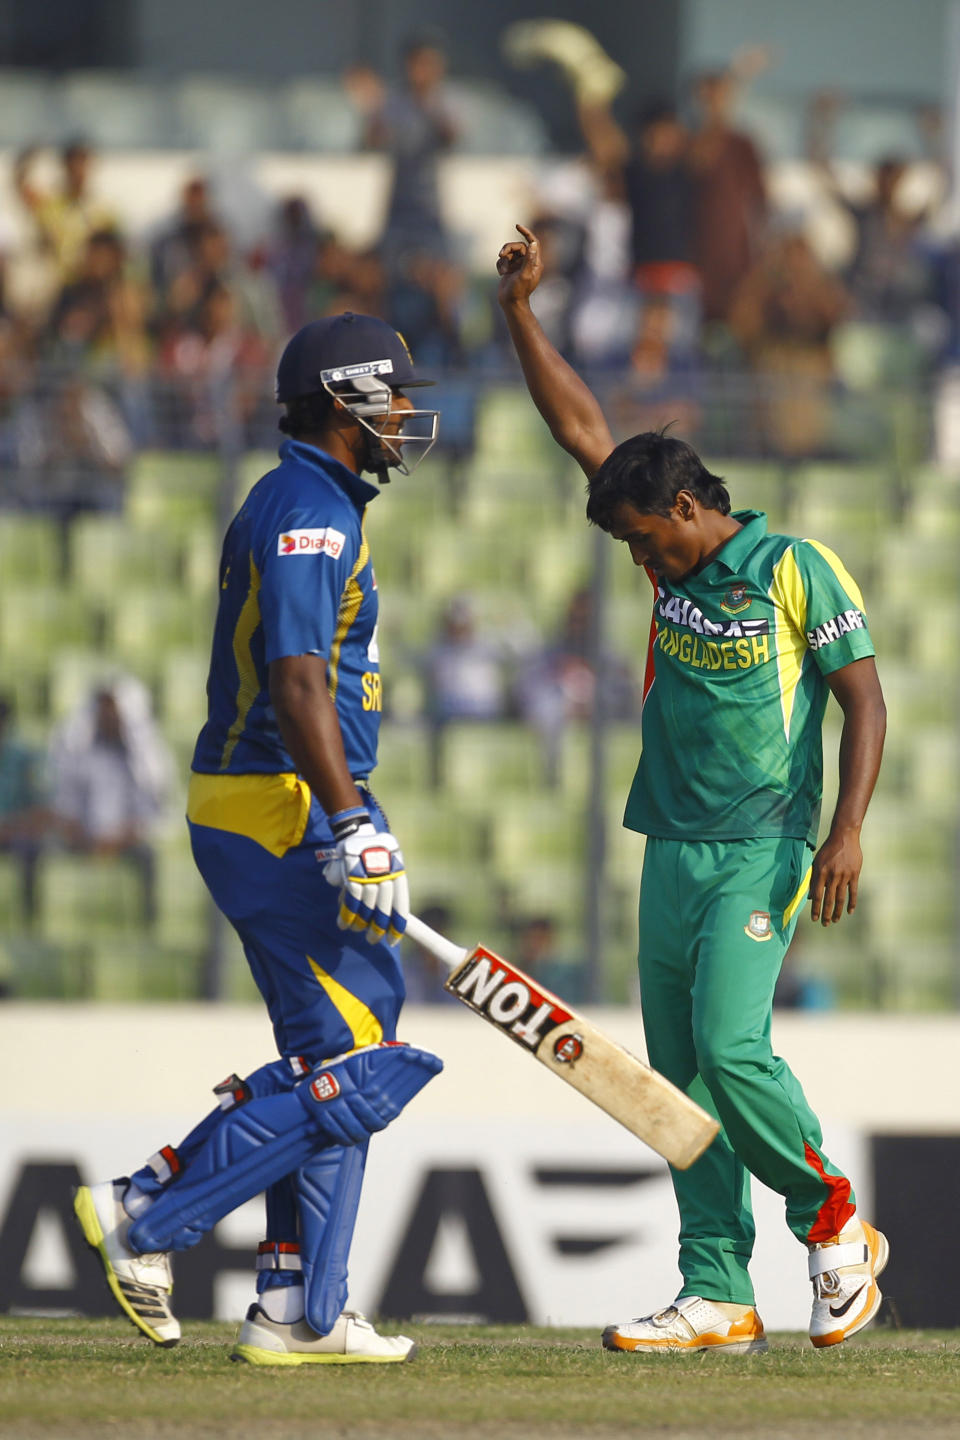 Bangladesh’s Rubel Hossain, right, celebrates the dismissal of Sri Lanka’s Thisara Perera during their second one-day international (ODI) cricket match in Dhaka, Bangladesh, Thursday, Feb. 20, 2014. (AP Photo/A.M. Ahad)